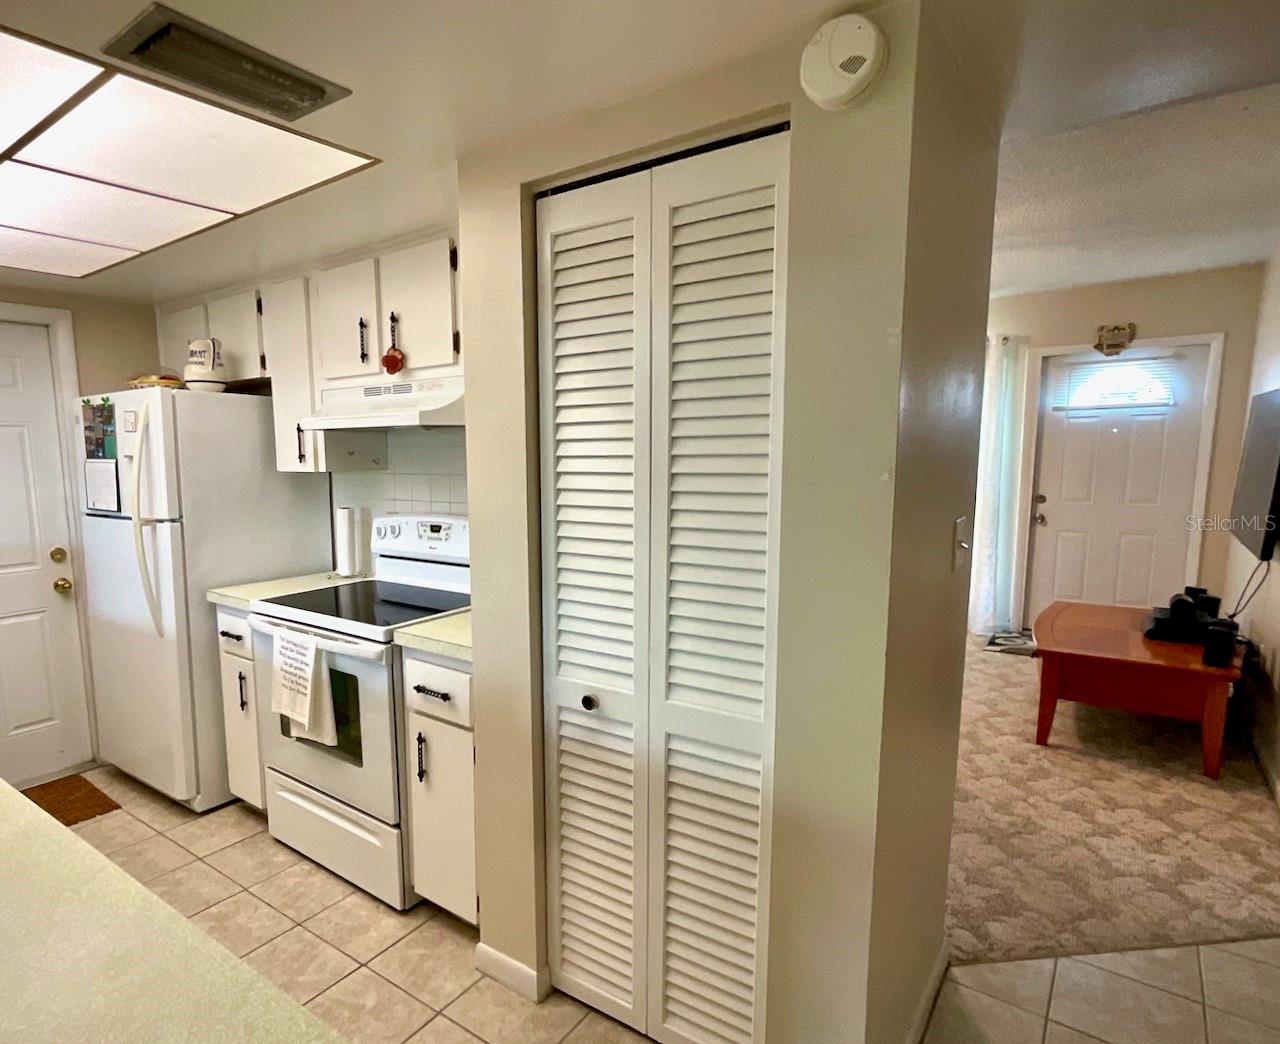 Kitchen pantry, range and refrigerator area